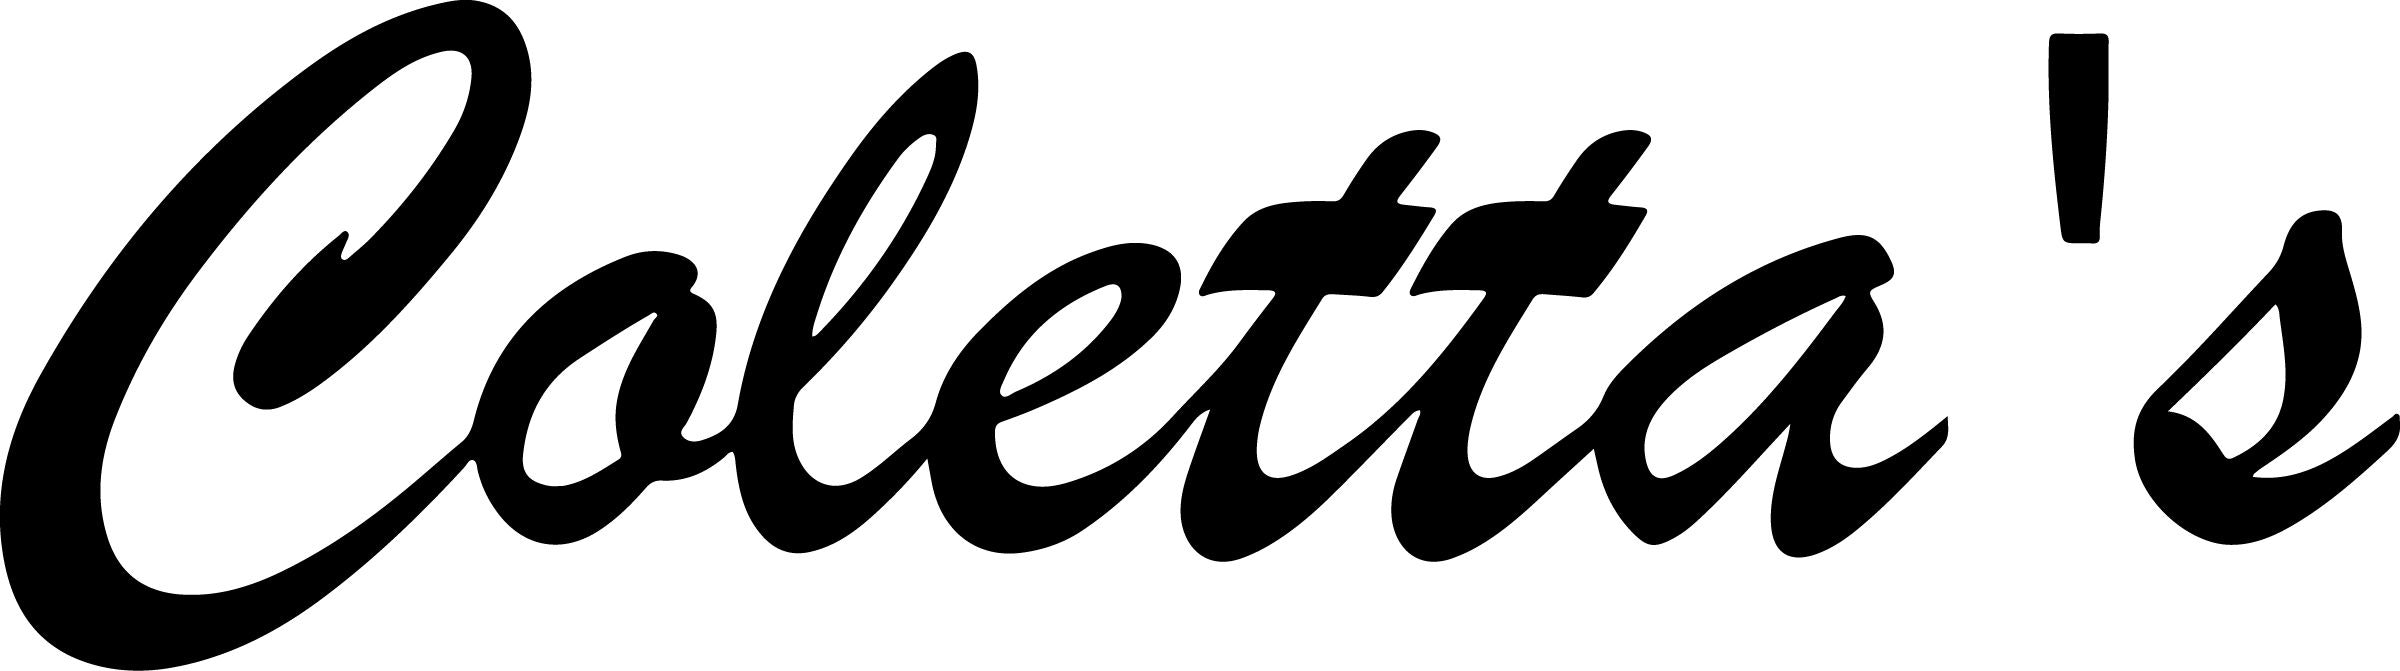 Coletta's Logo